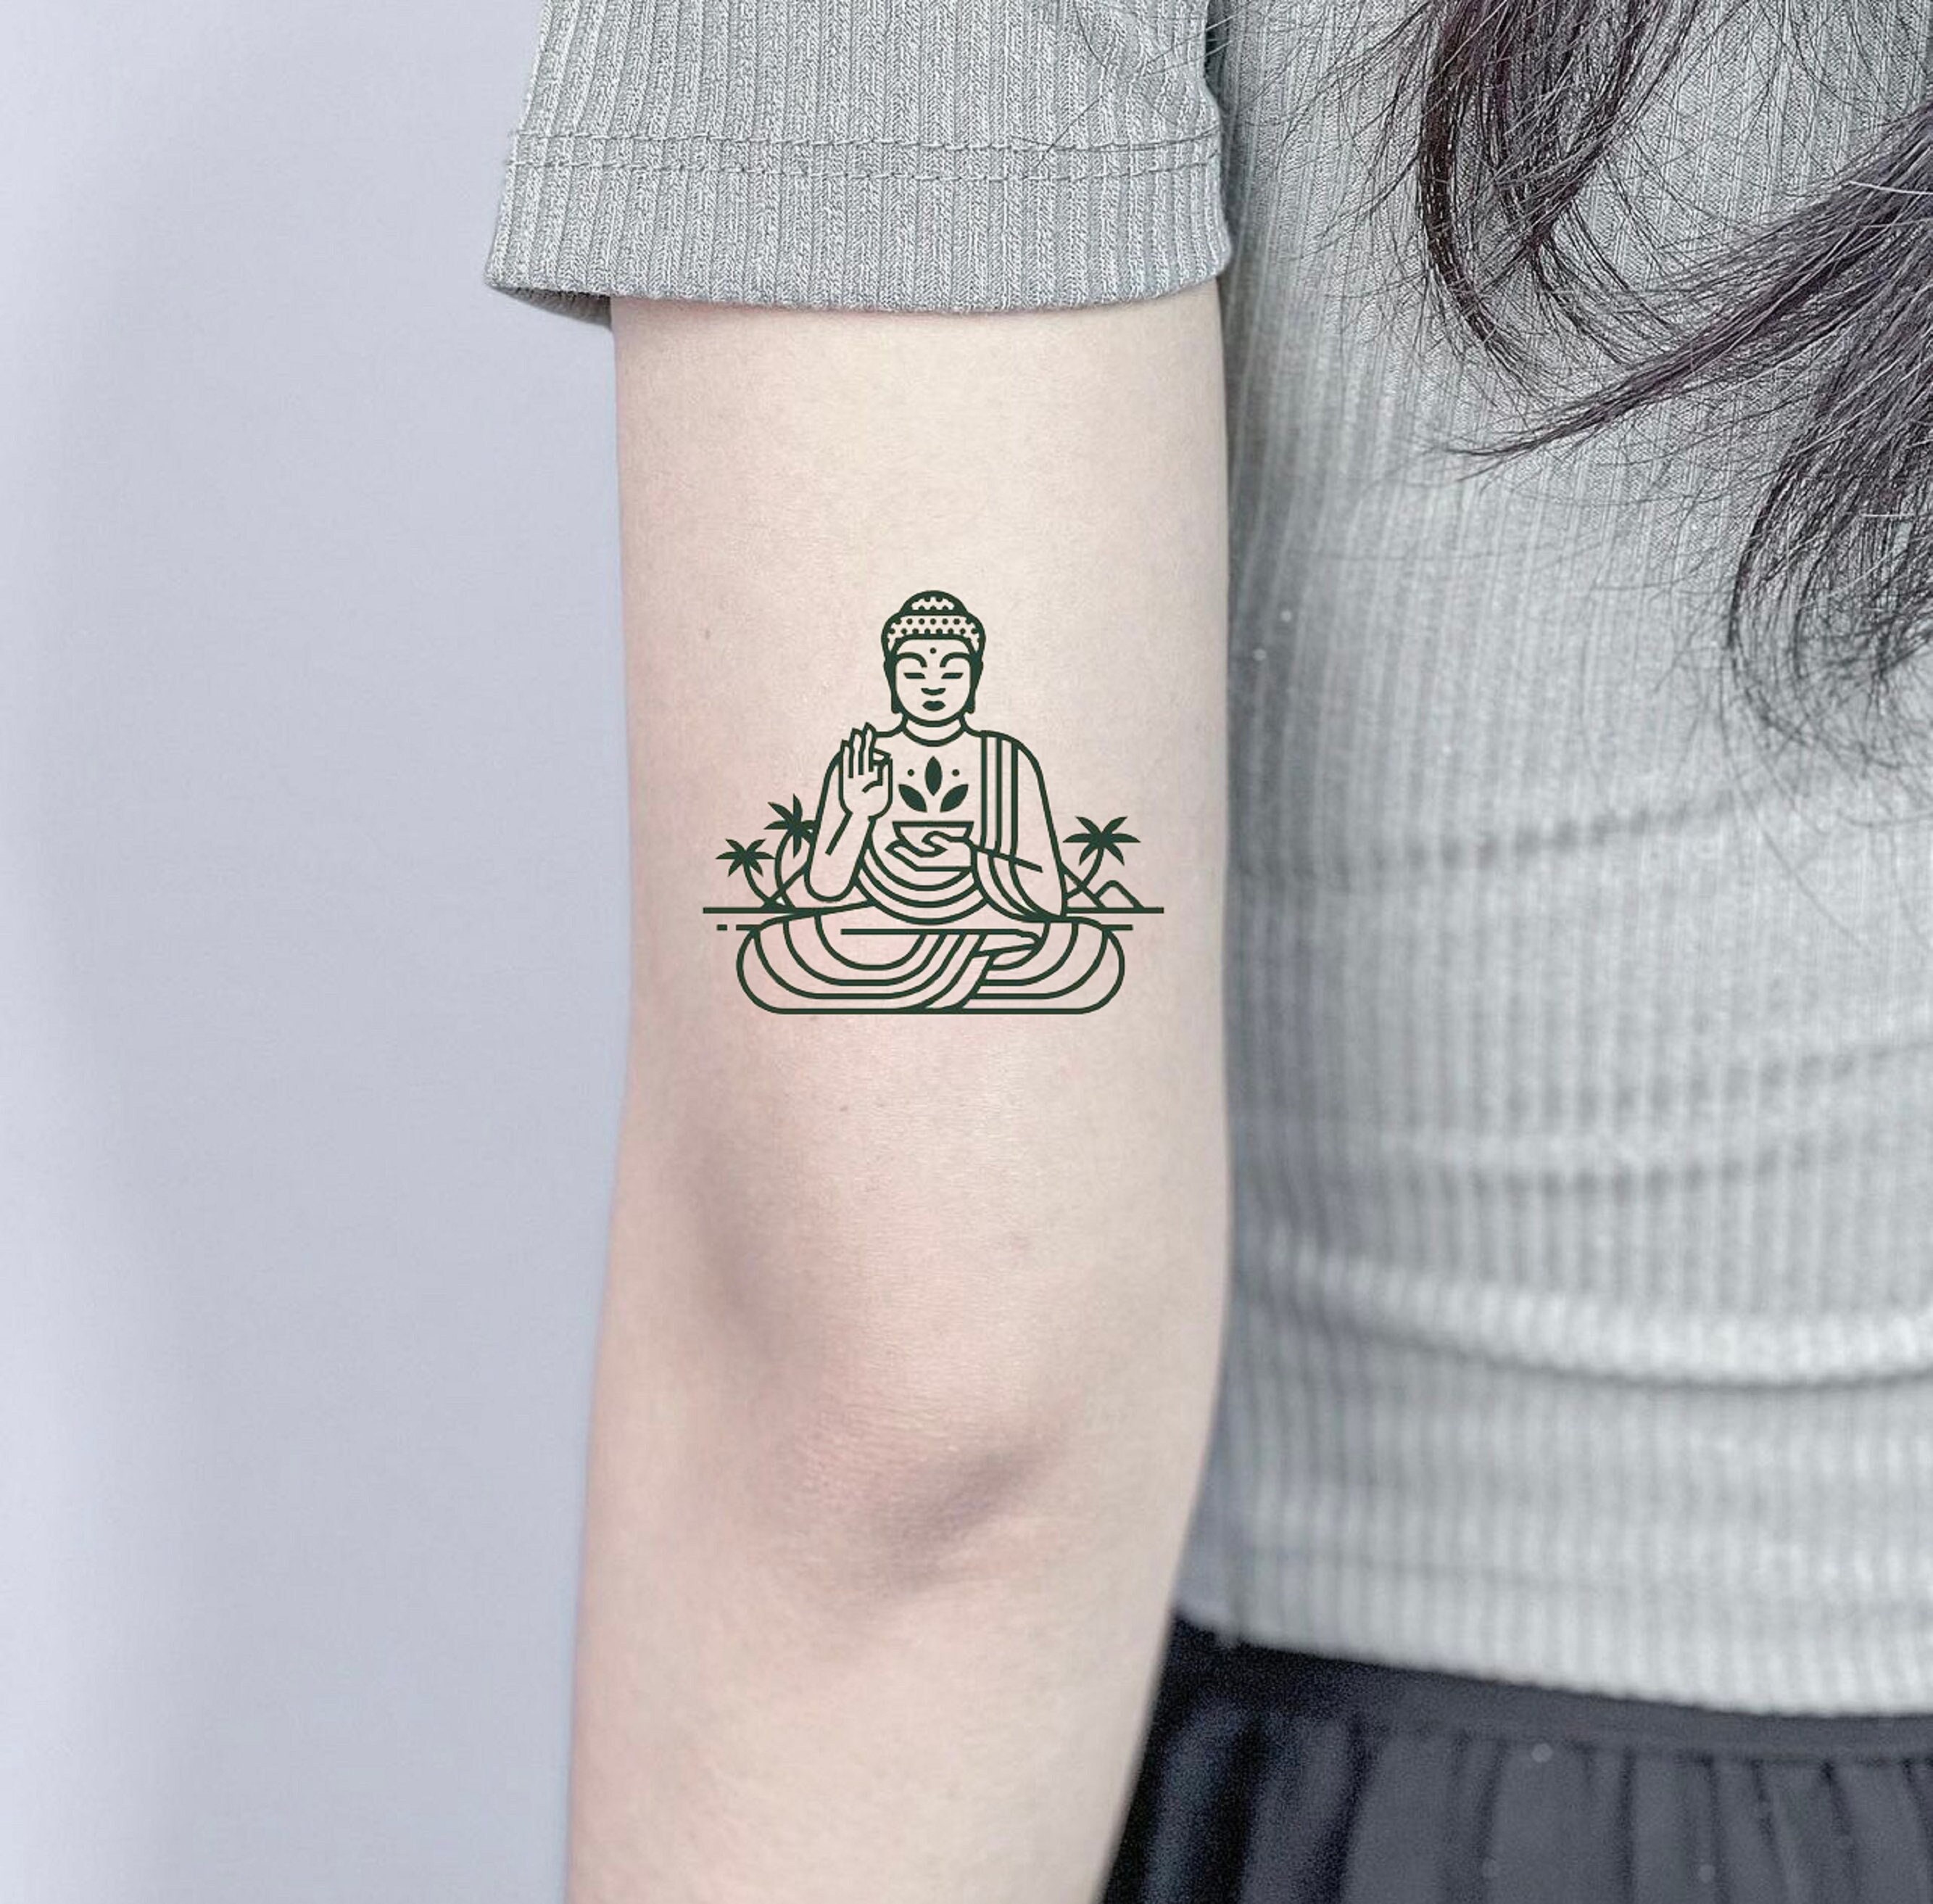 theravada - Buddhism Thervada Tattoos - Buddhism Stack Exchange